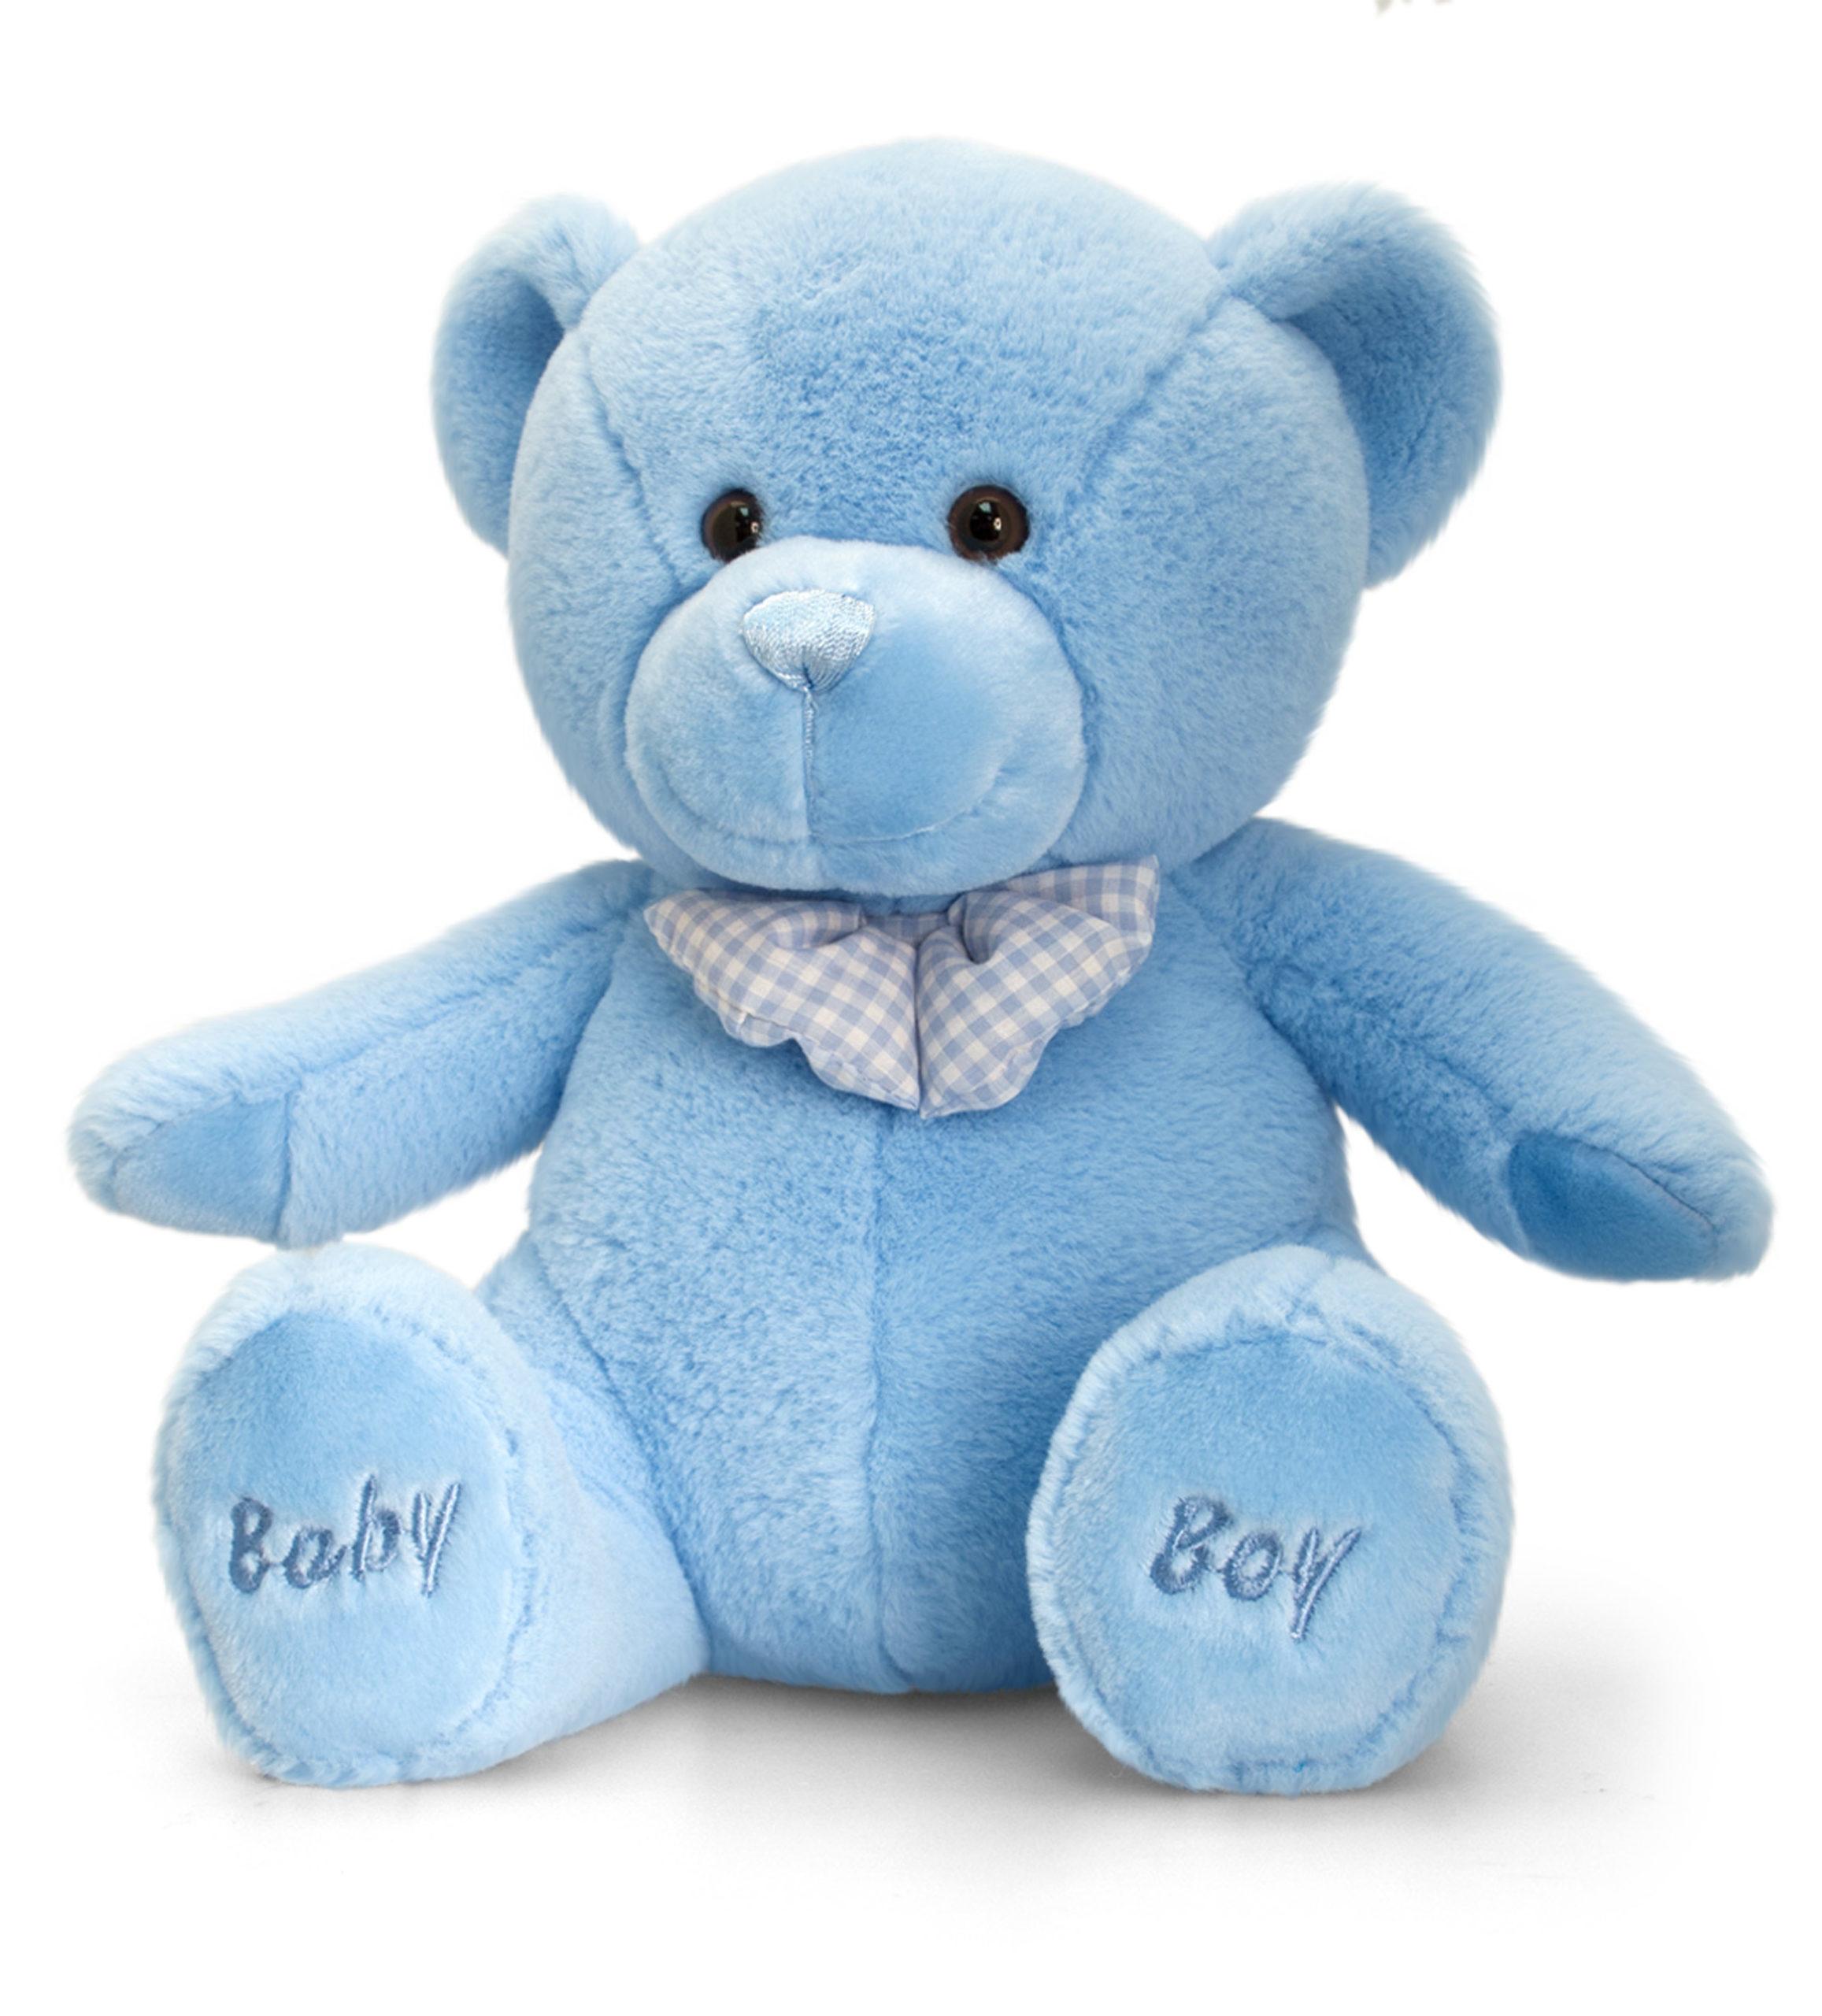 baby teddy bear